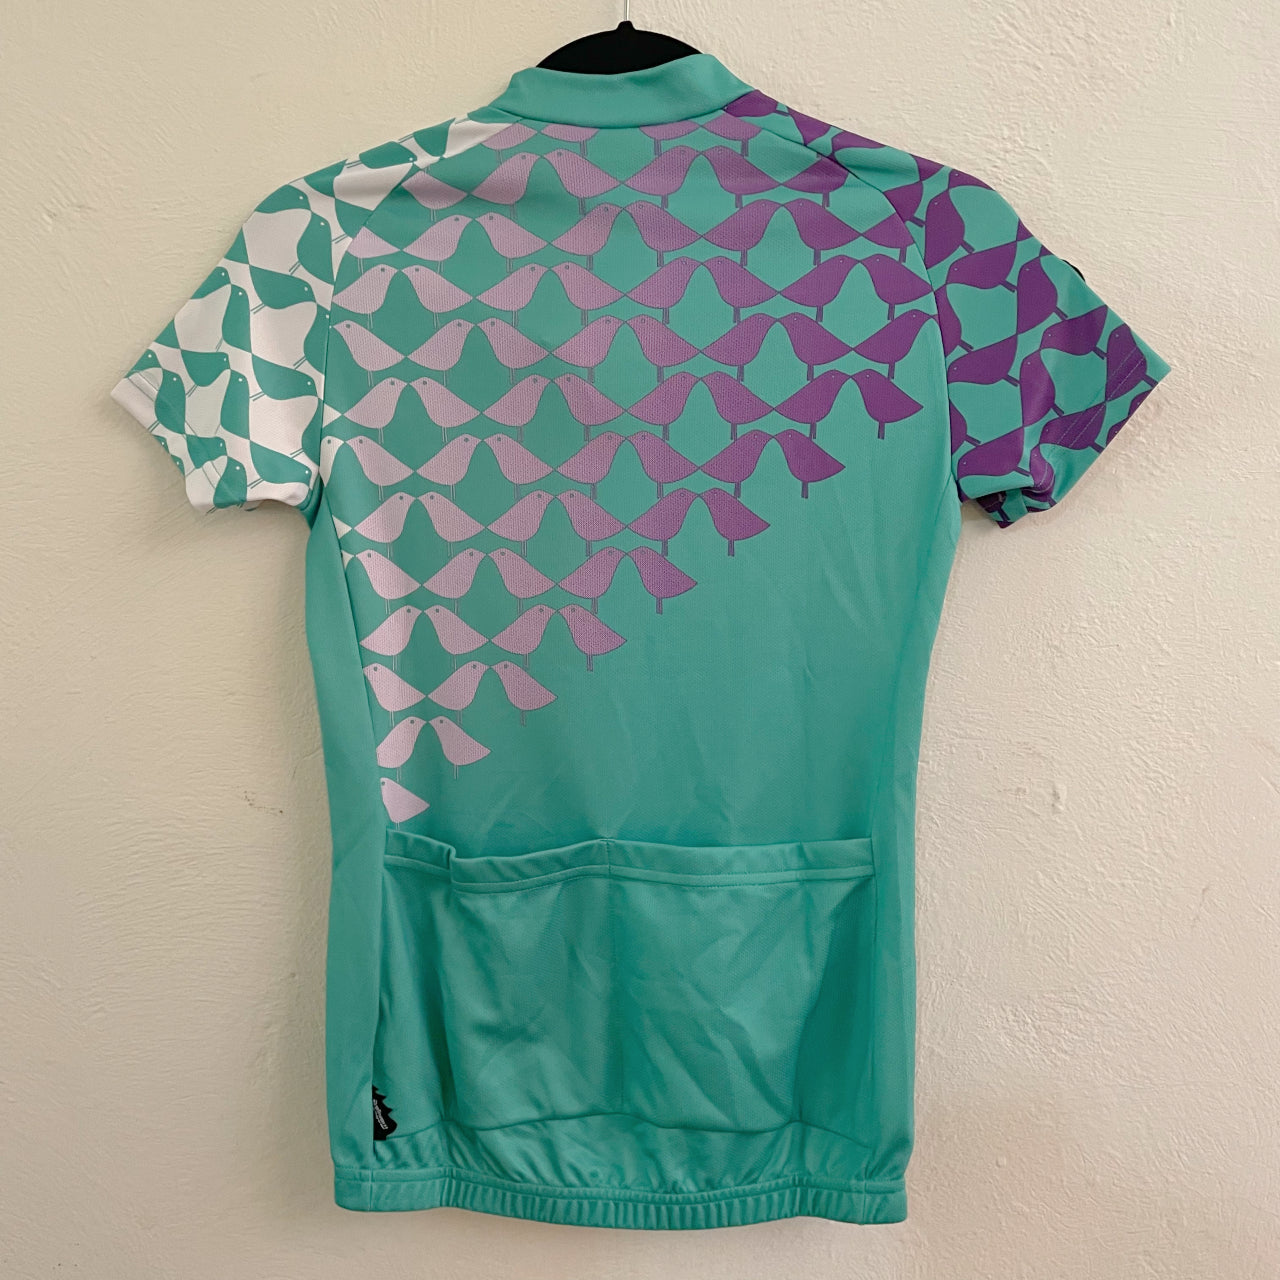 MALOJA Bike Shirt 1/2 - Kissingbird - Peacock - M